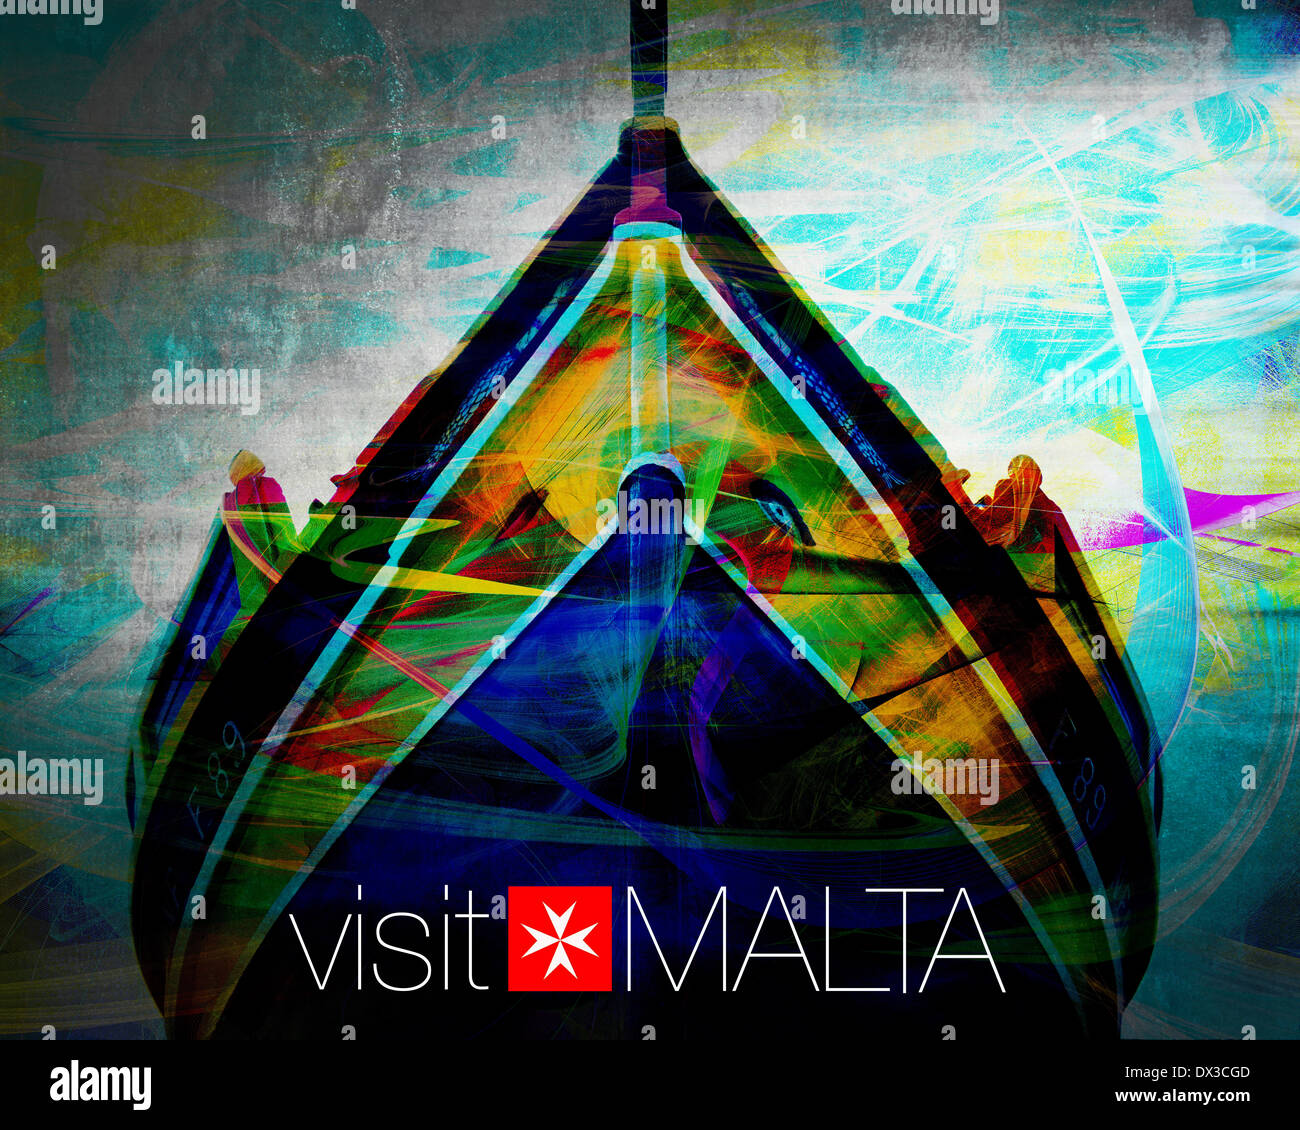 MT - MALTA: Visitar Malta, concepto Foto de stock